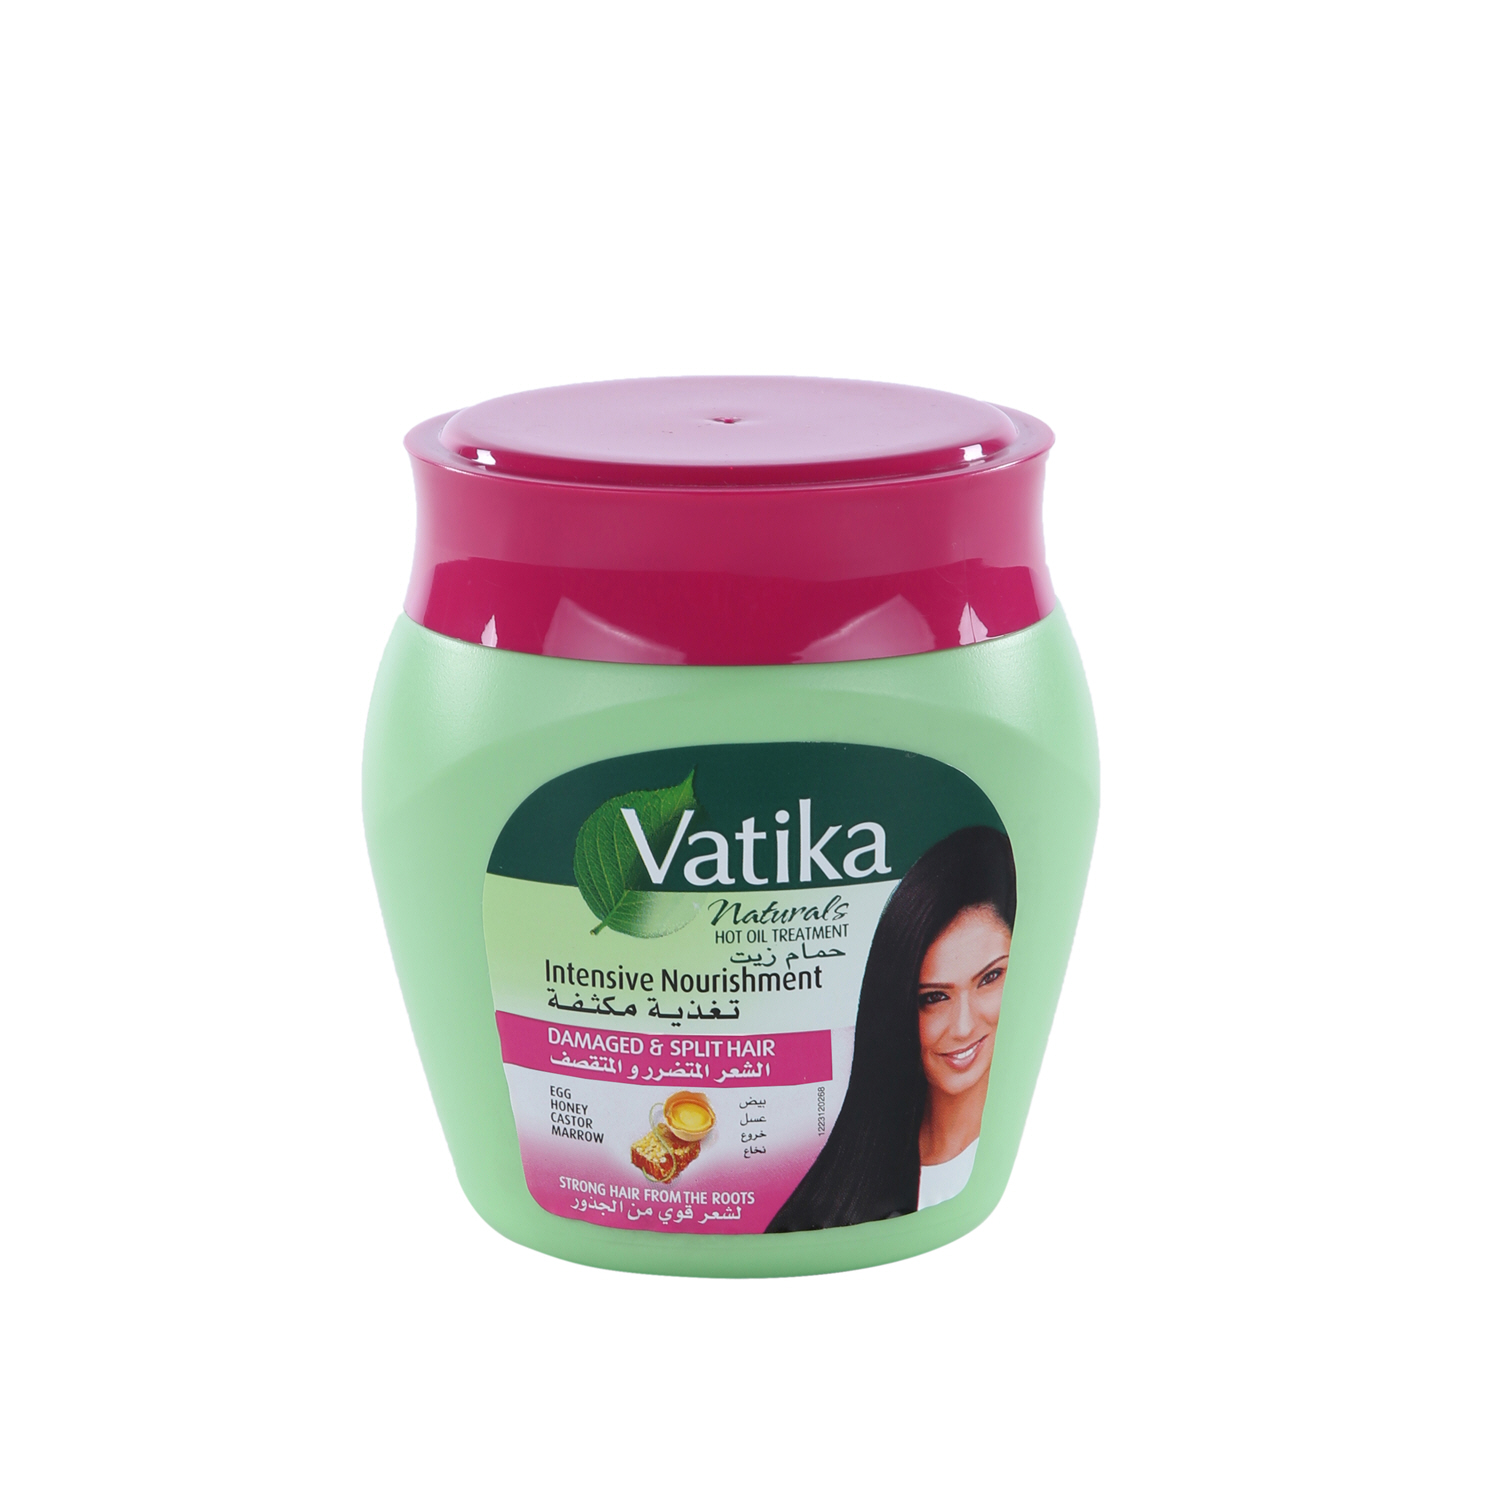 Dabur Vatika Naturals Hot Oil Treatment Intensive Nourishment 500gm